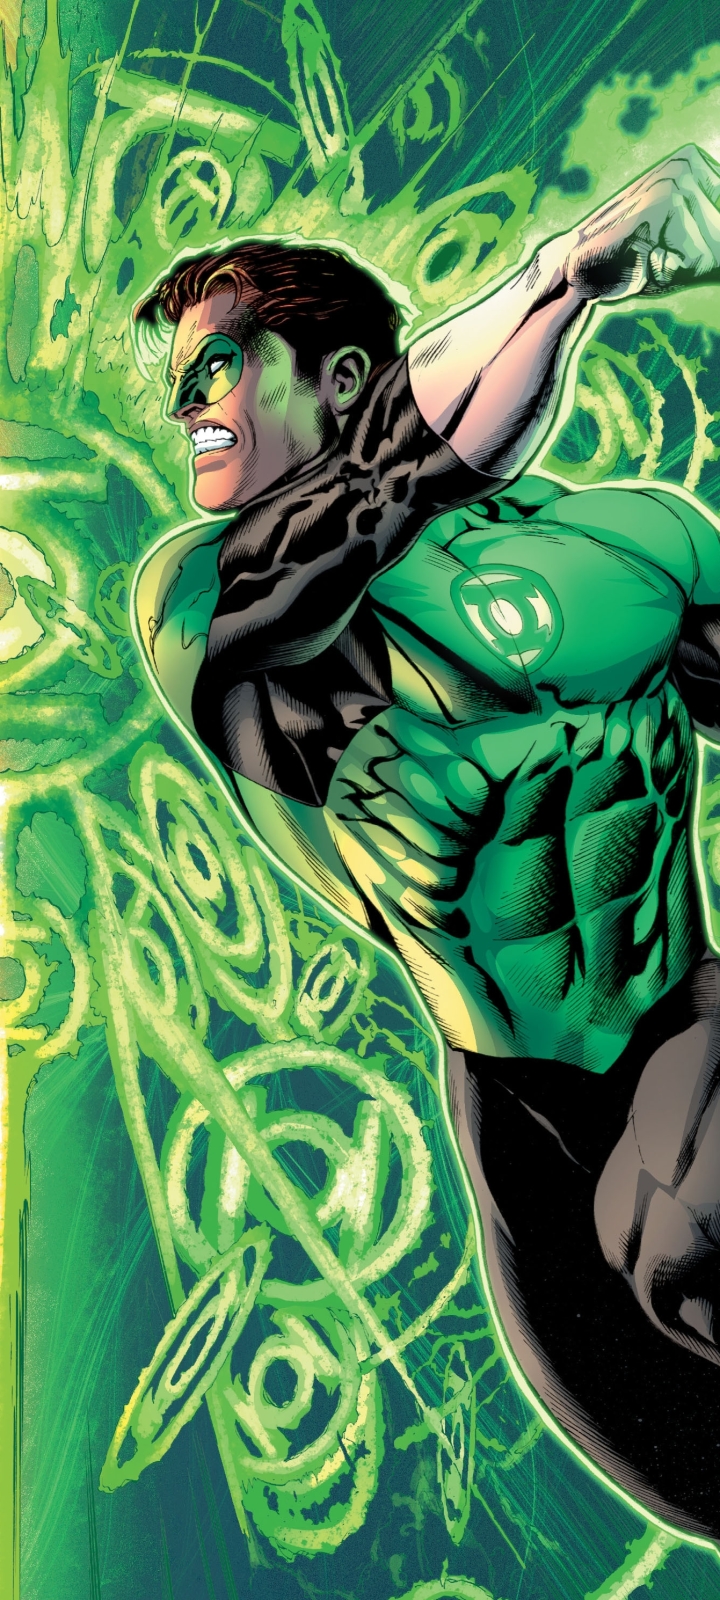 Descarga gratuita de fondo de pantalla para móvil de Historietas, Superhéroe, Dc Comics, Linterna Verde, Hal Jordan, Green Lantern Corps.